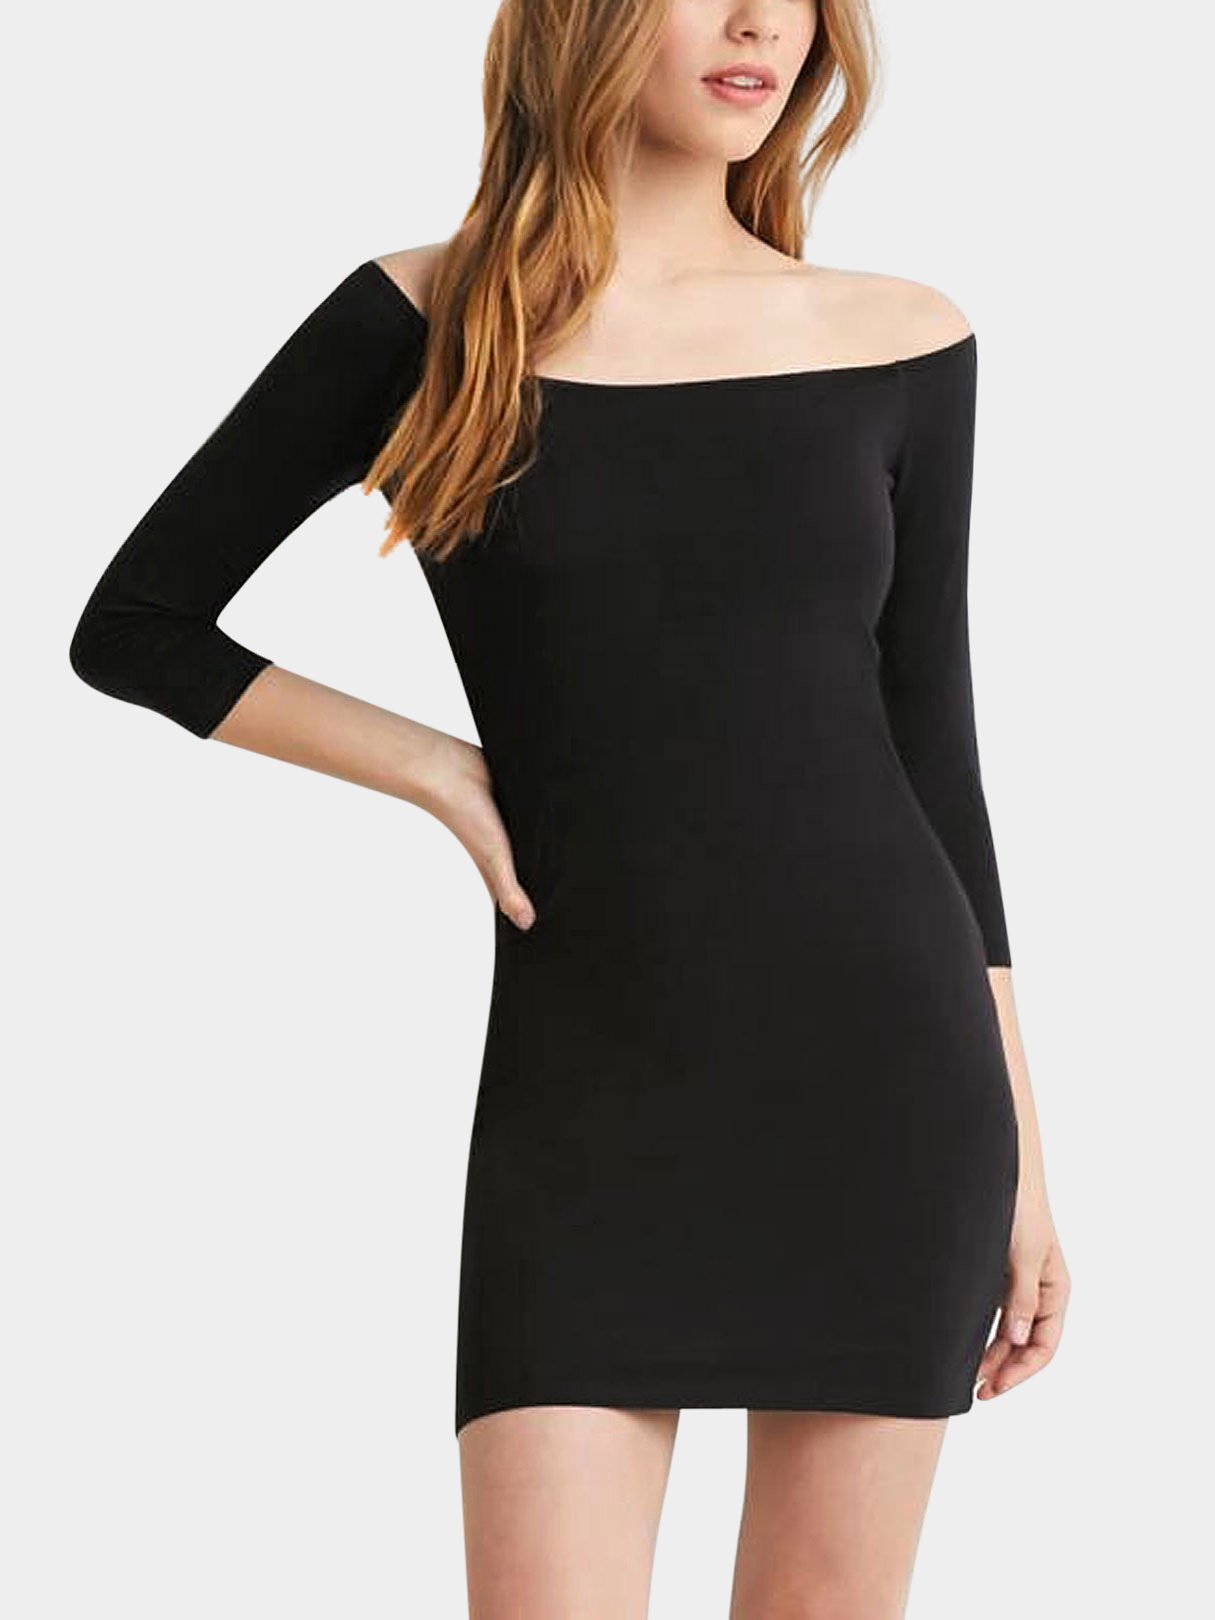 Wholesale Off The Shoulder Plain 3/4 Length Sleeve Black Dresses